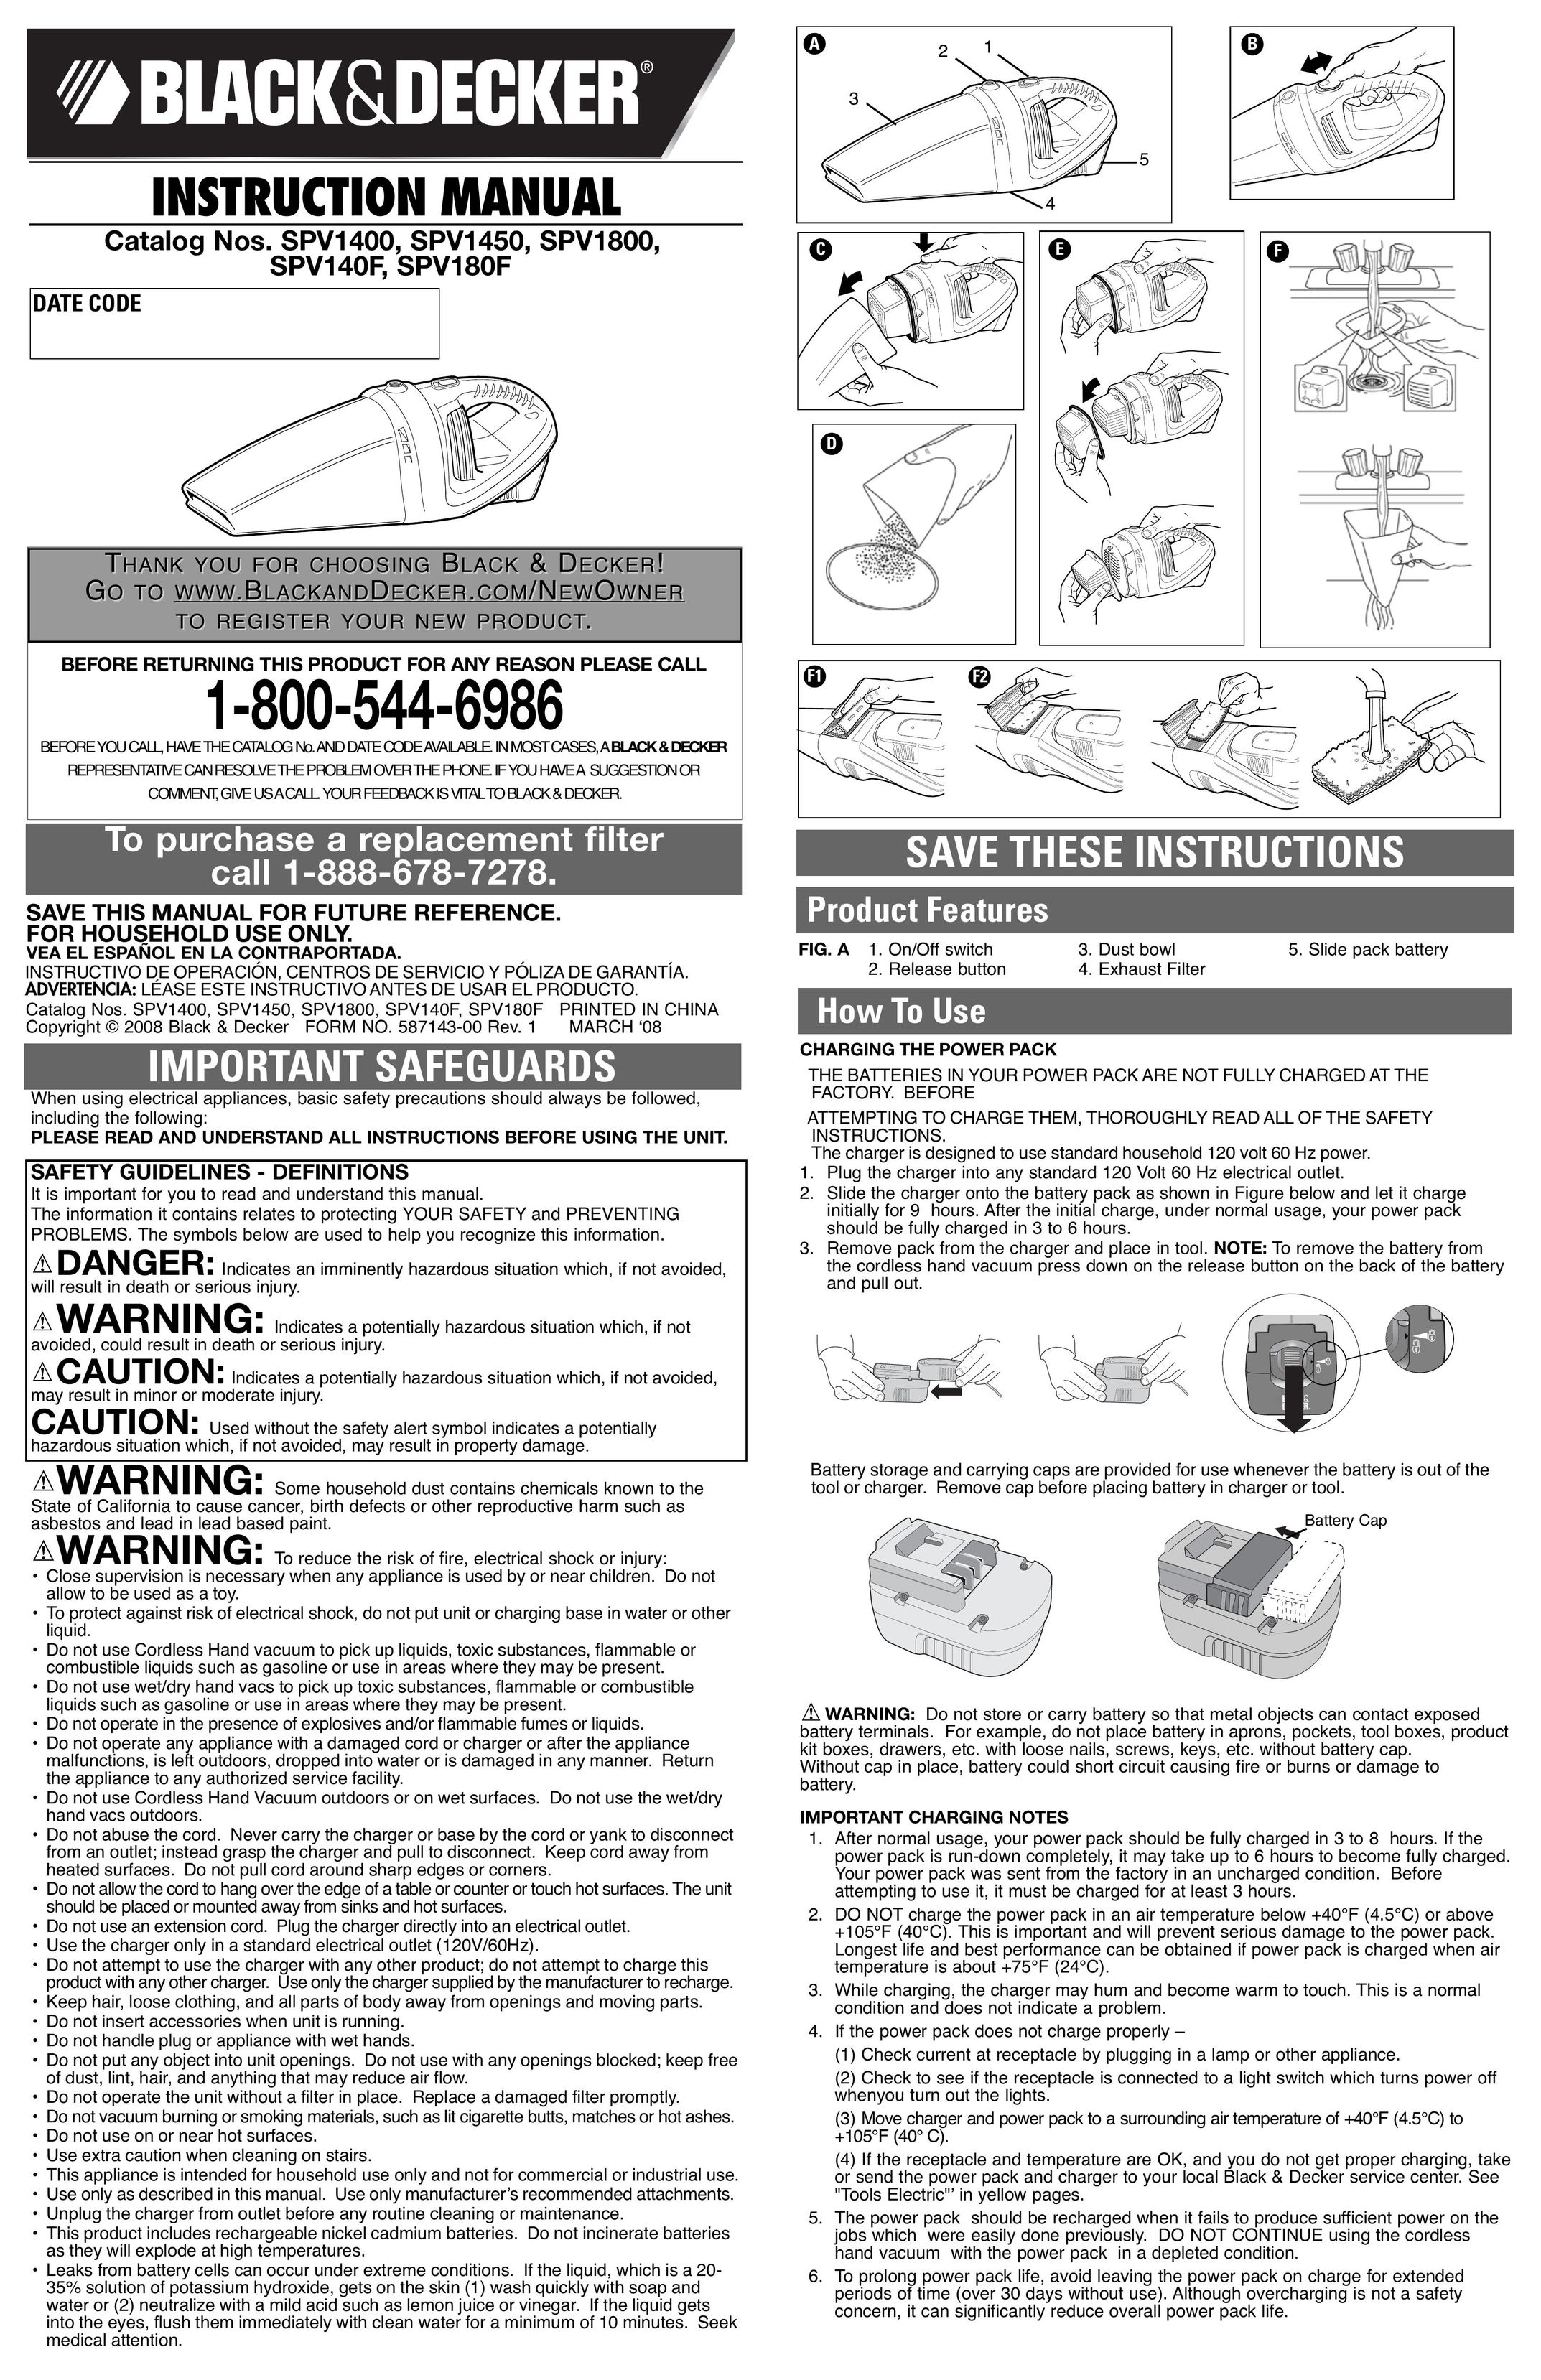 Black & Decker 587143-00 Vacuum Cleaner User Manual